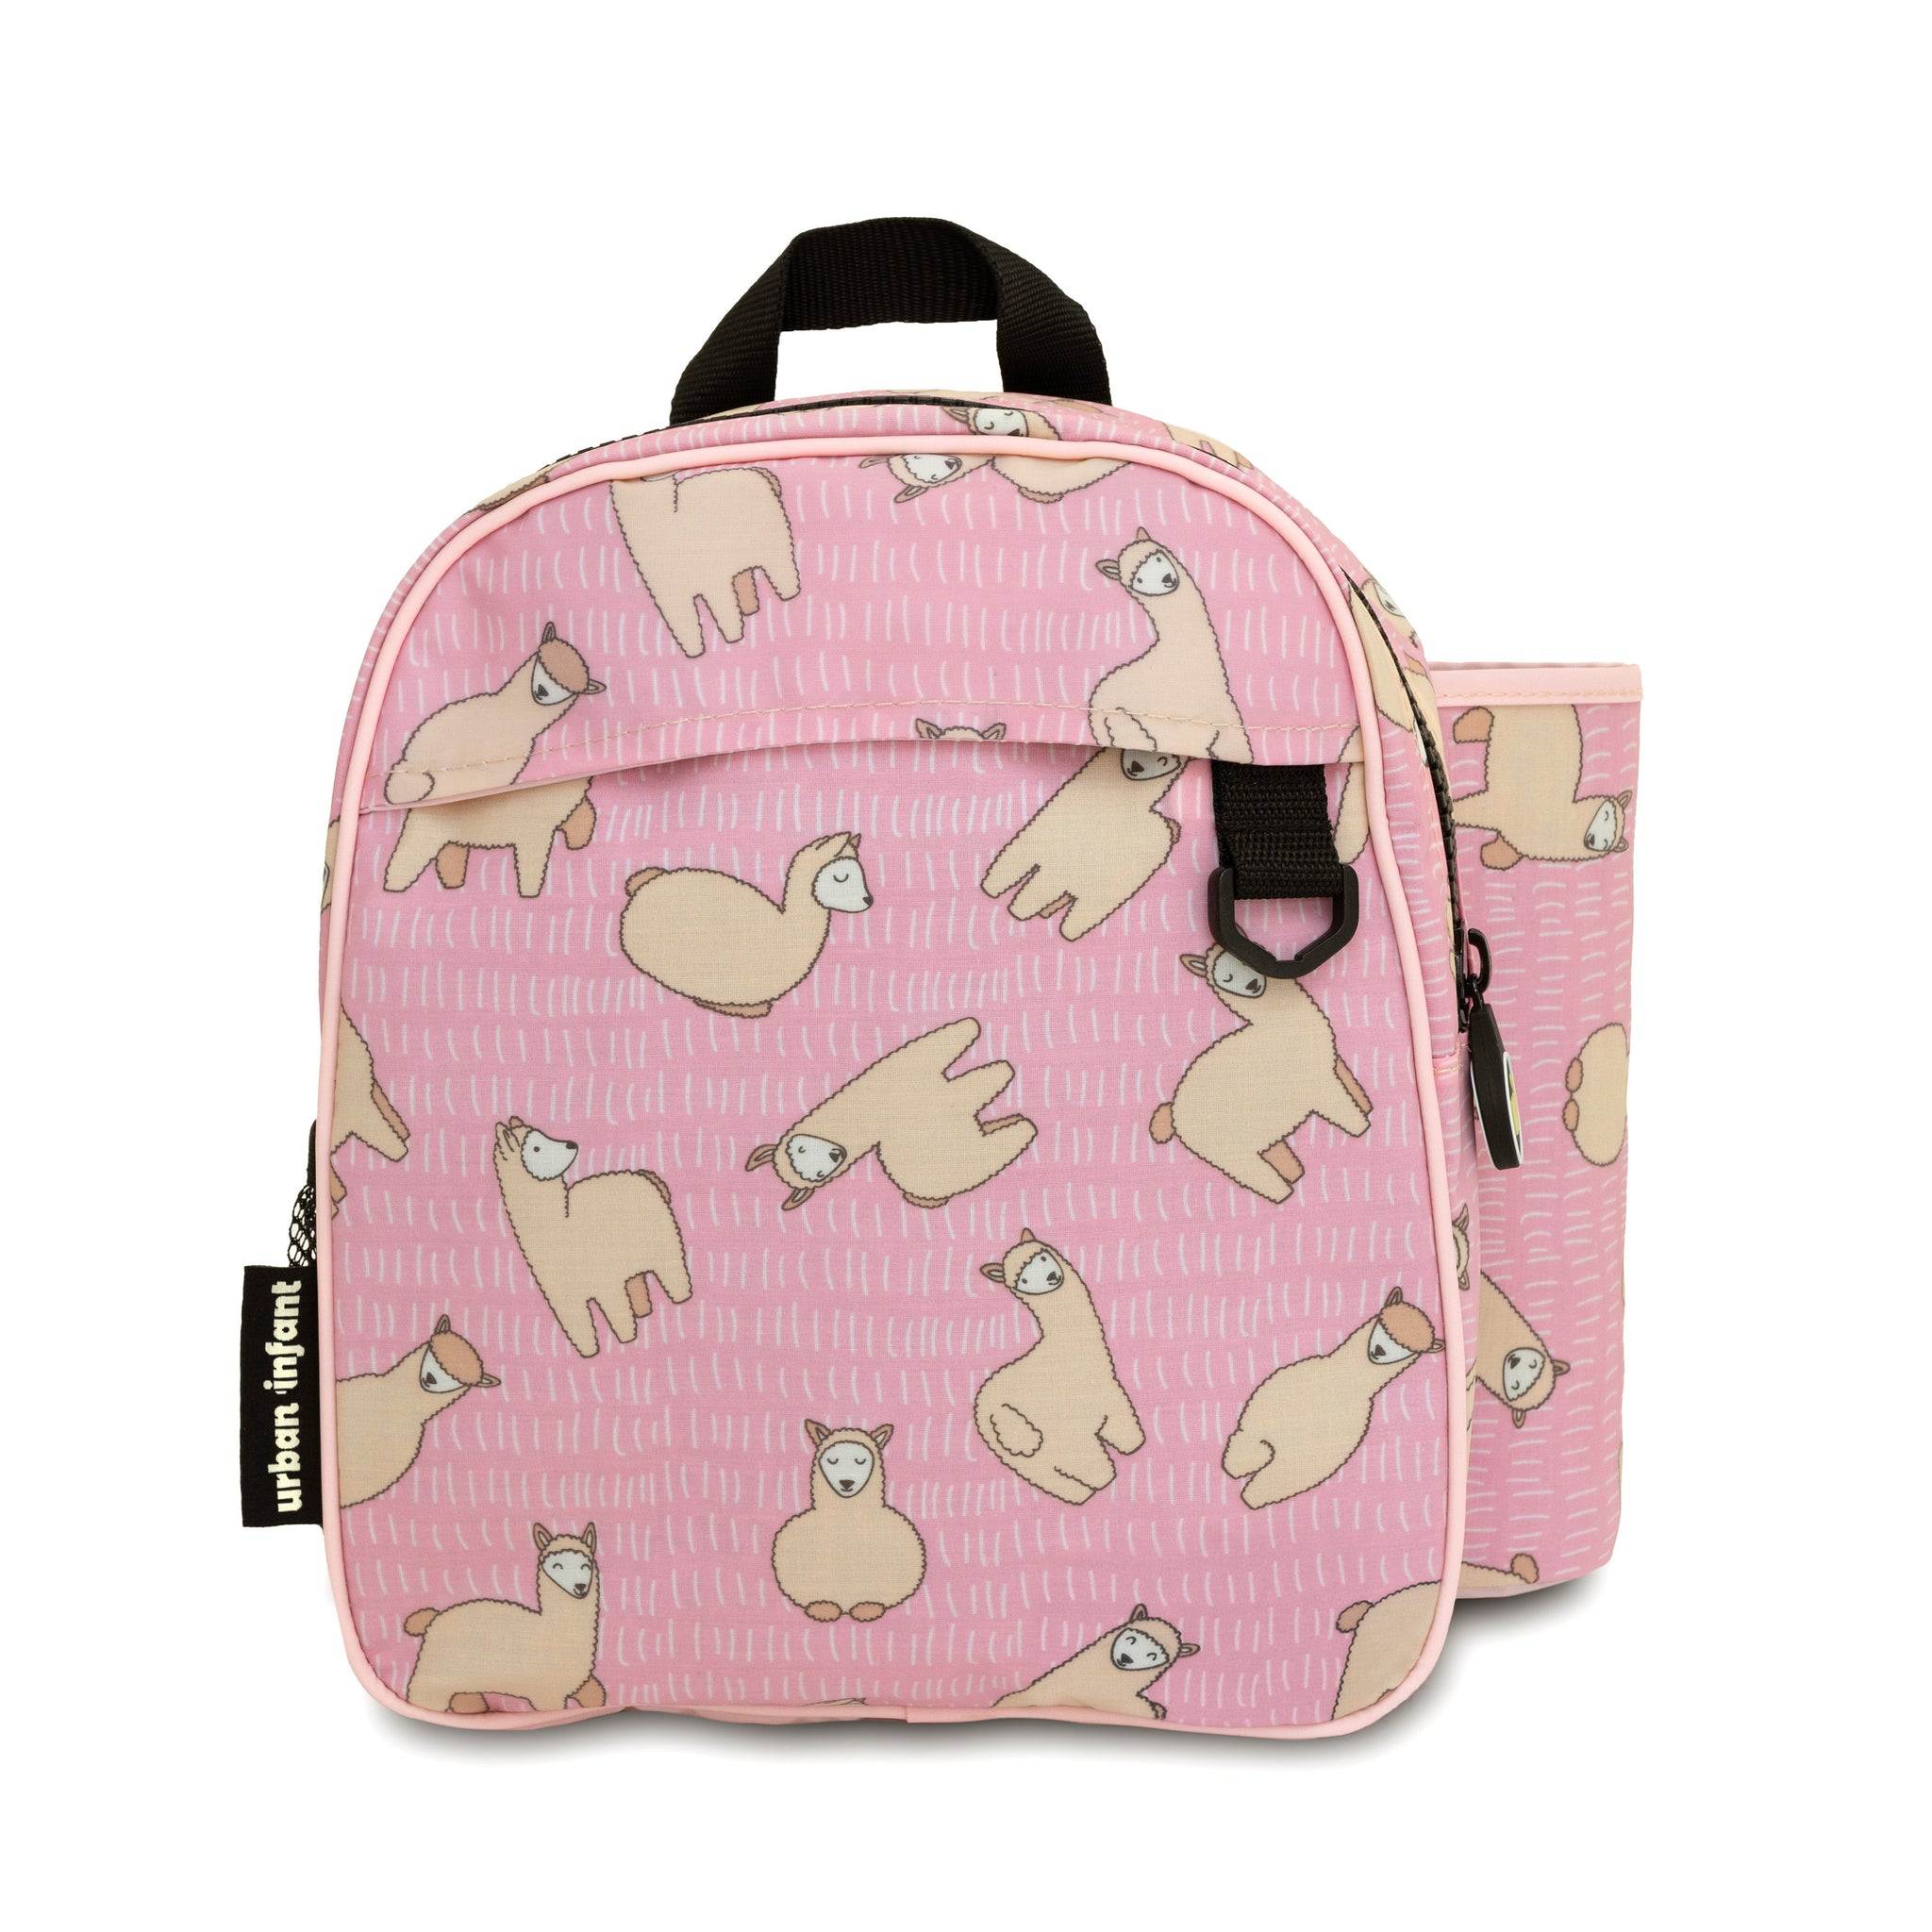 Urban Infant Kids Packie Backpack – Preschool Daycare Lightweight